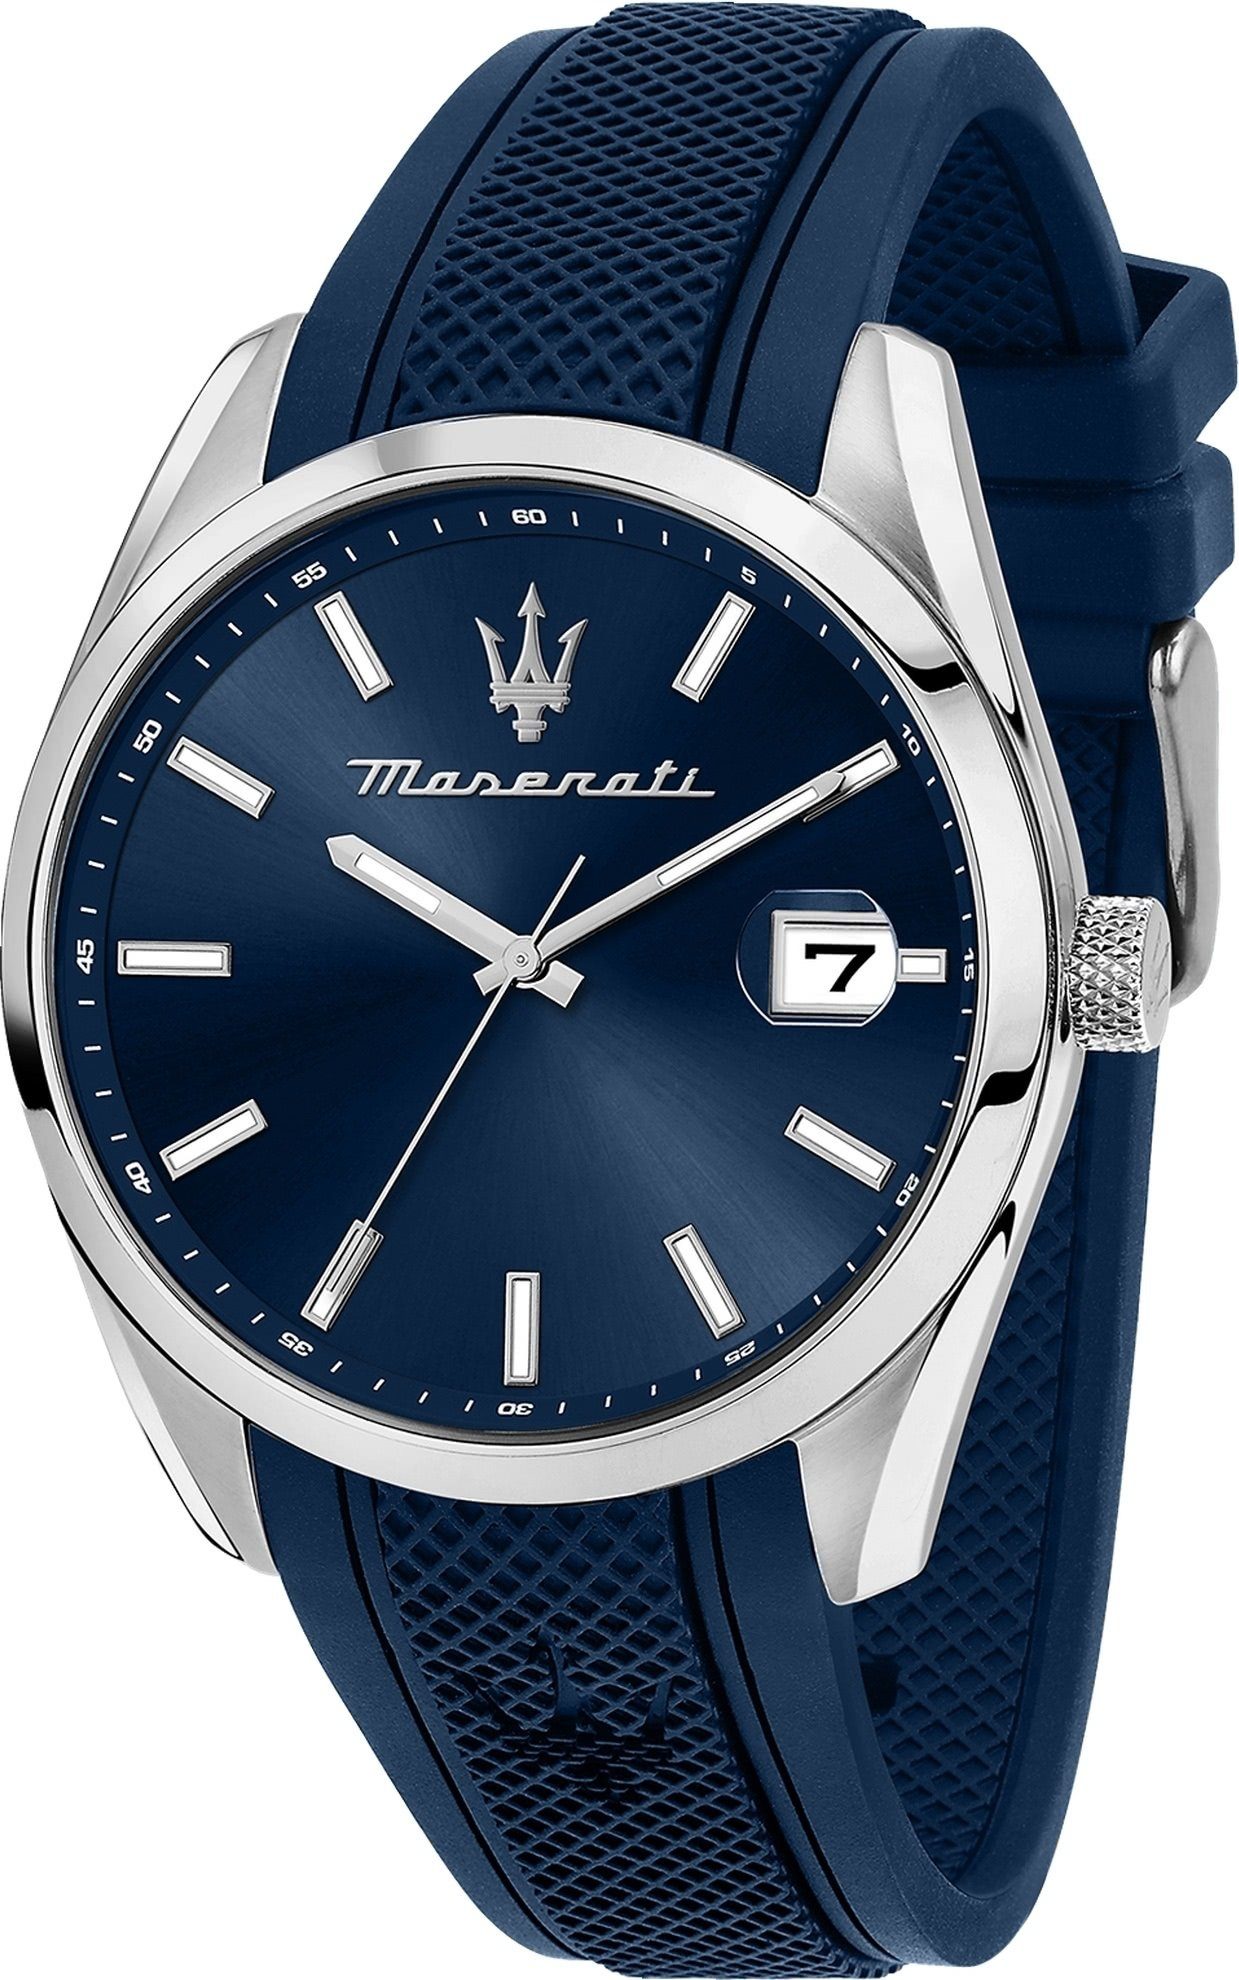 MASERATI Quarzuhr Maserati Herren Armband Attrazione, (Analoguhr), Herrenuhr rund, groß (ca. 43mm) Silikonarmband, Made-In Italy